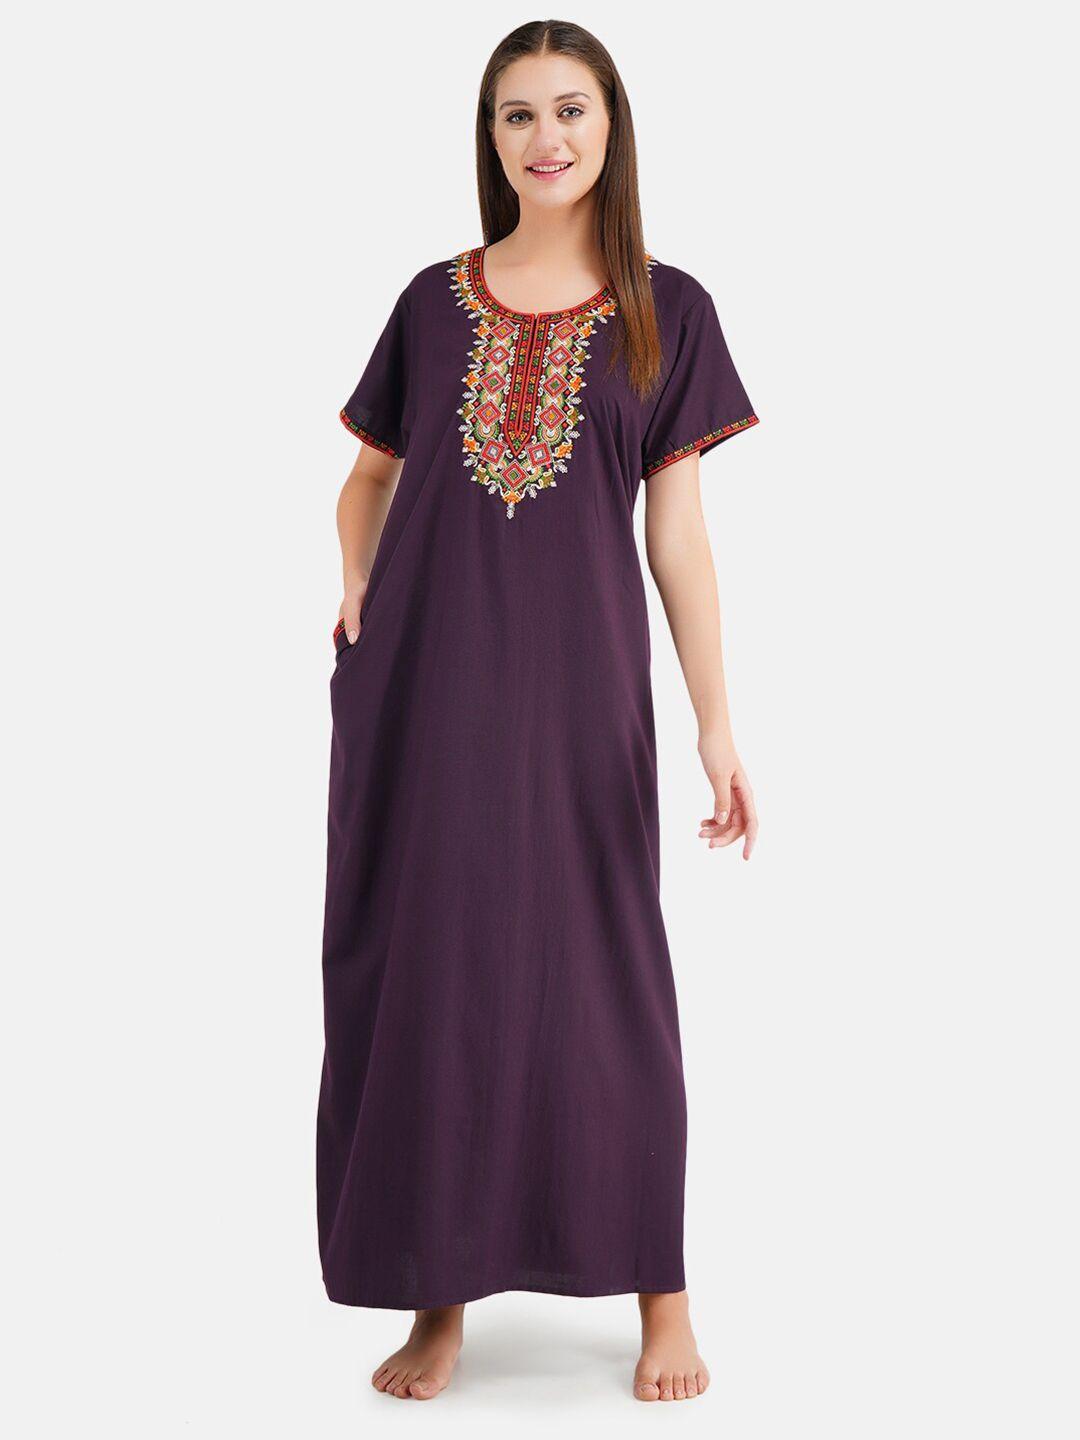 koi-sleepwear-woman-purple-embroidered-maxi-cotton-nightdress-with-pockets